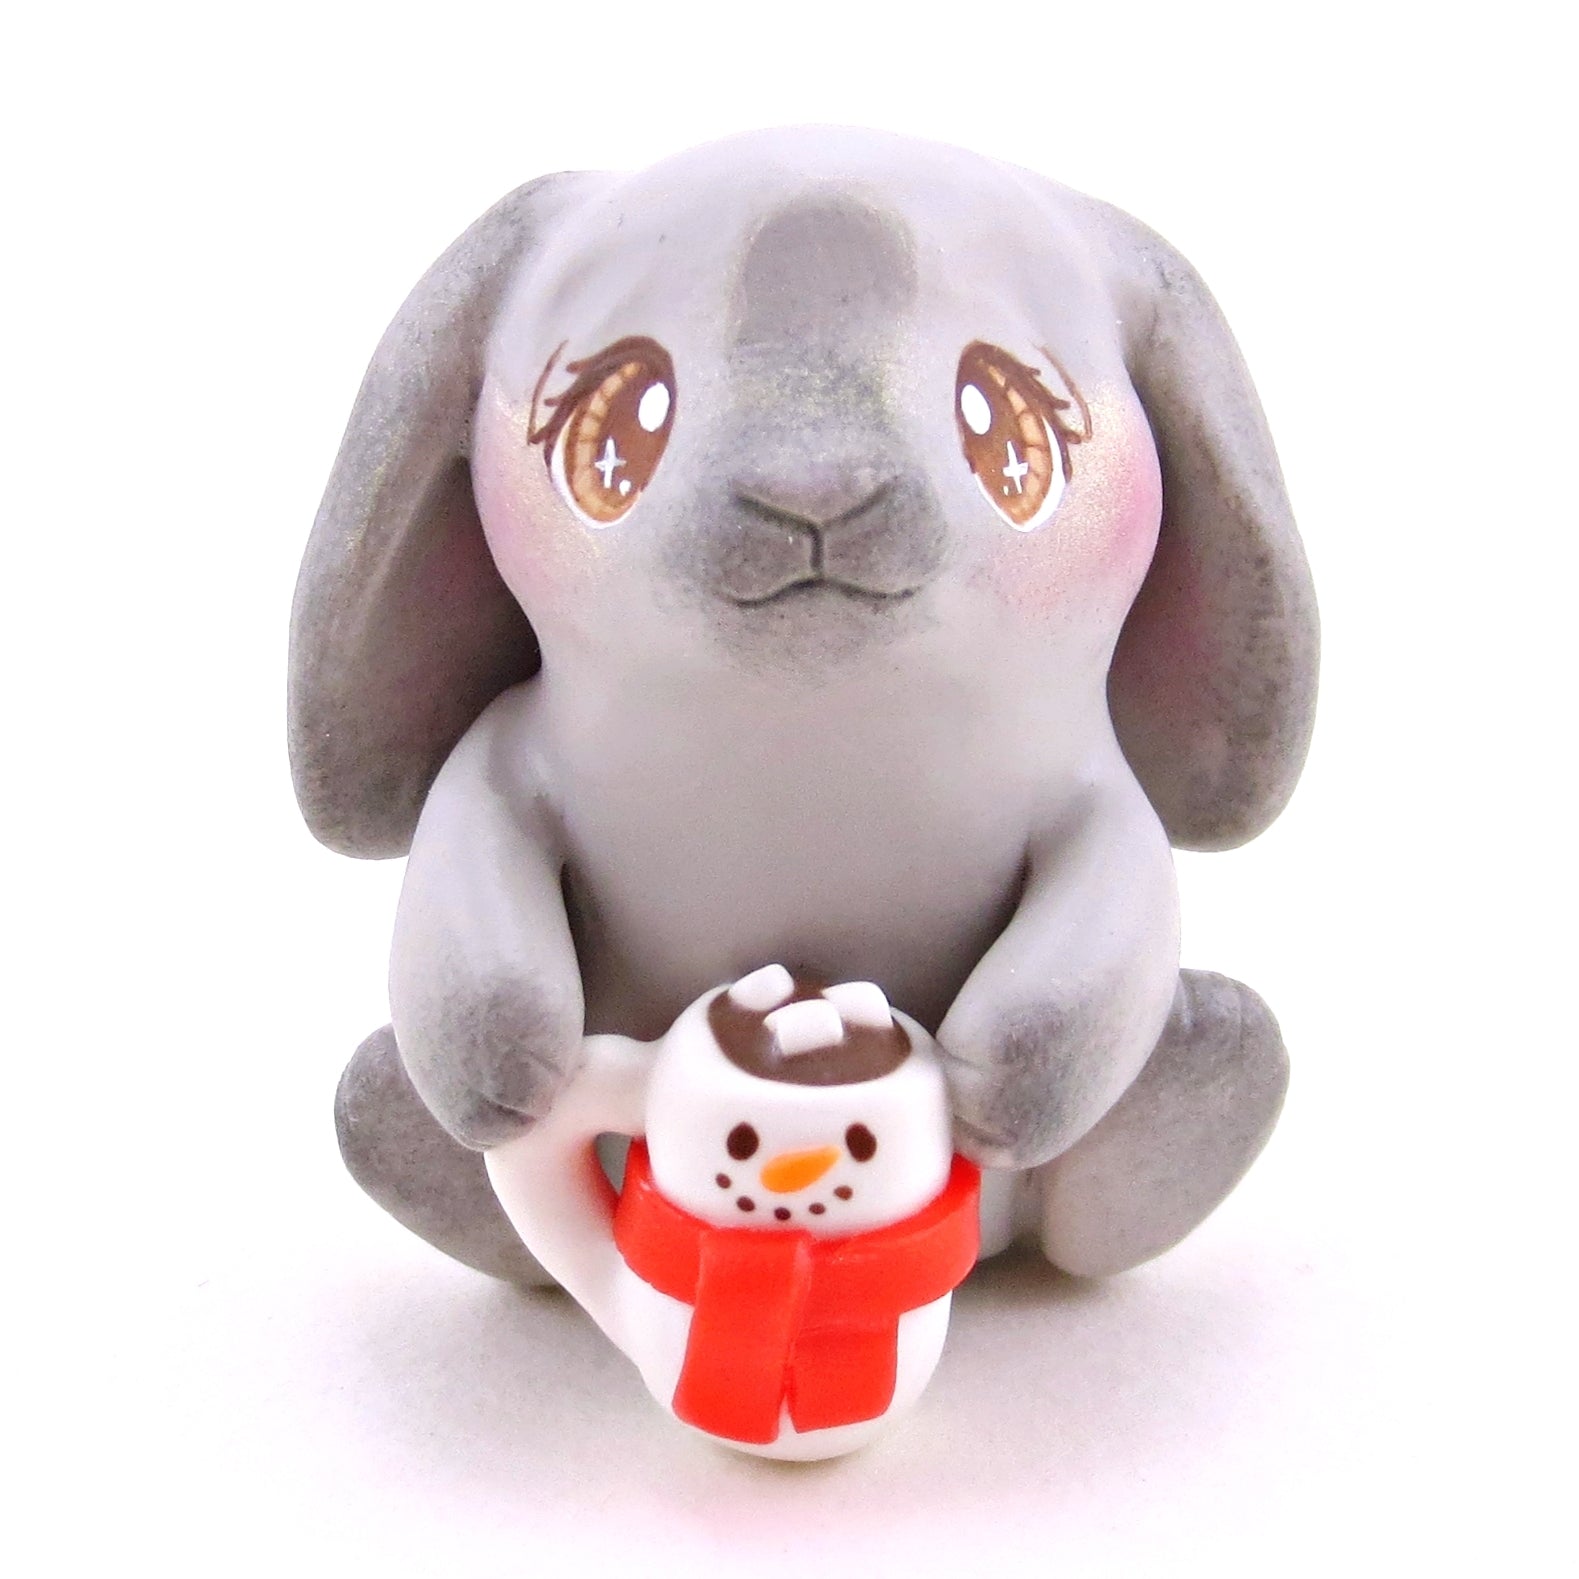 Bunny with a Snowman Hot Cocoa Mug Figurine - Polymer Clay Christmas Collection